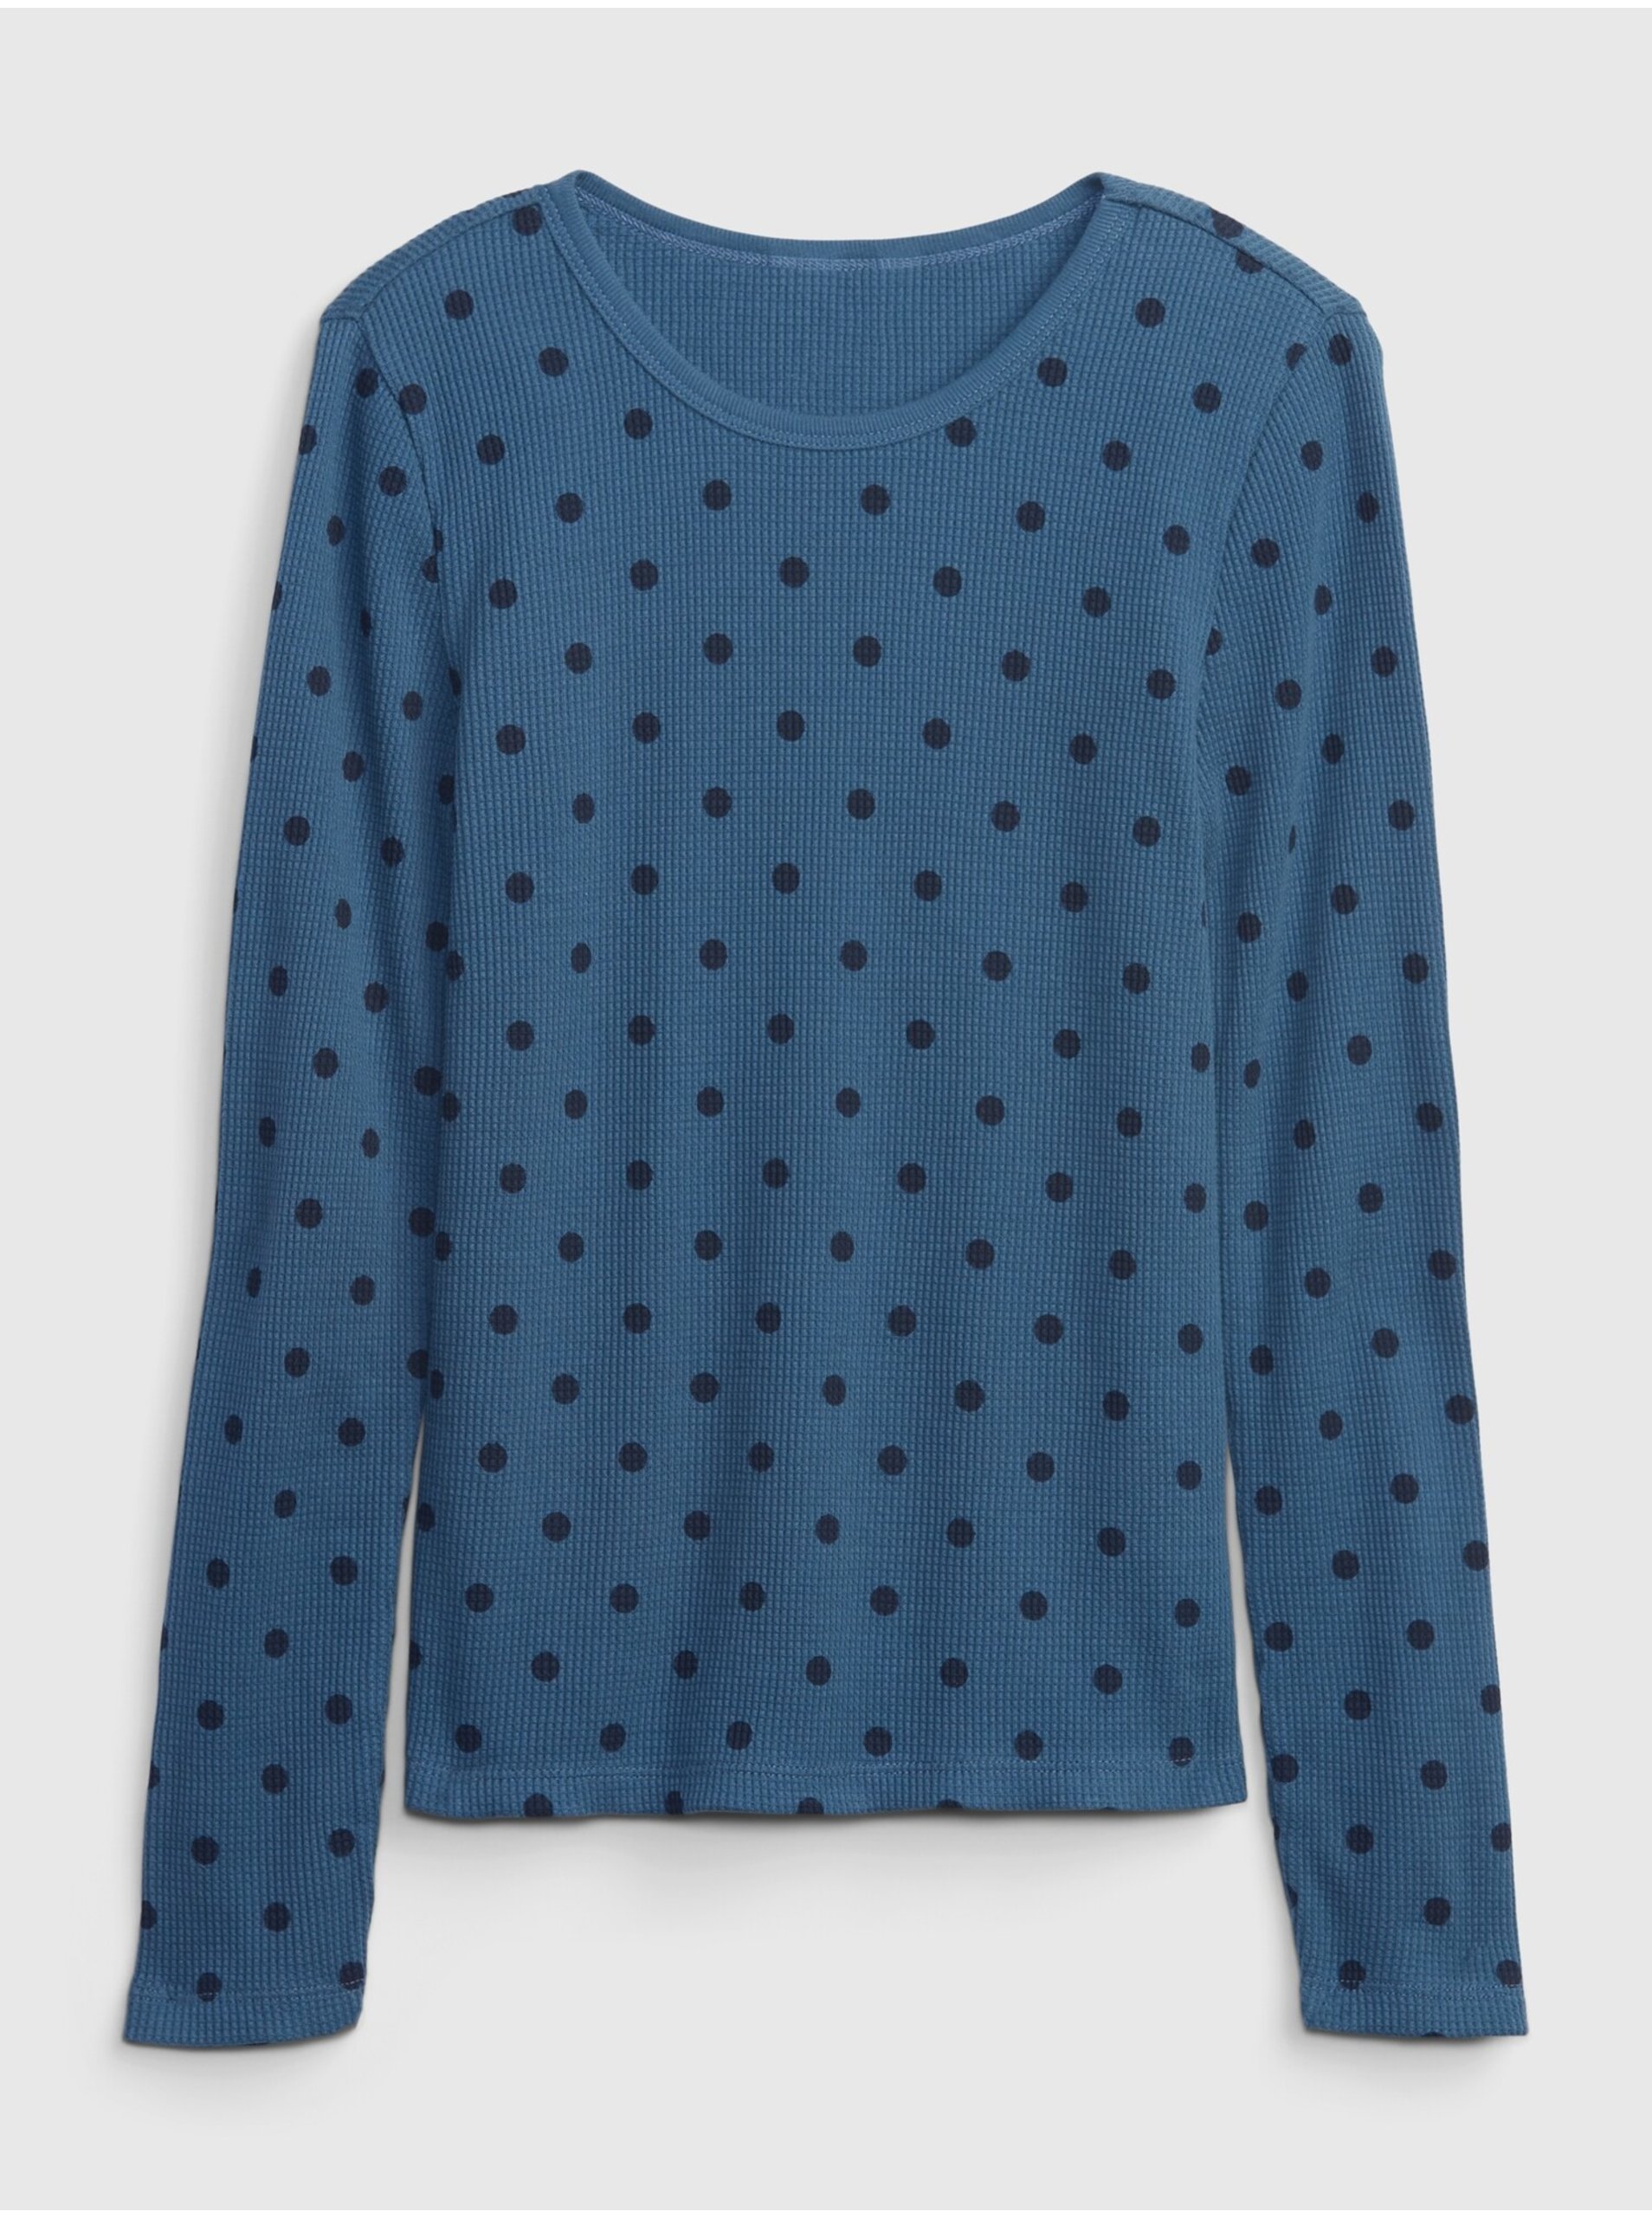 Lacno Modré dievčenské bodkované tričko GAP